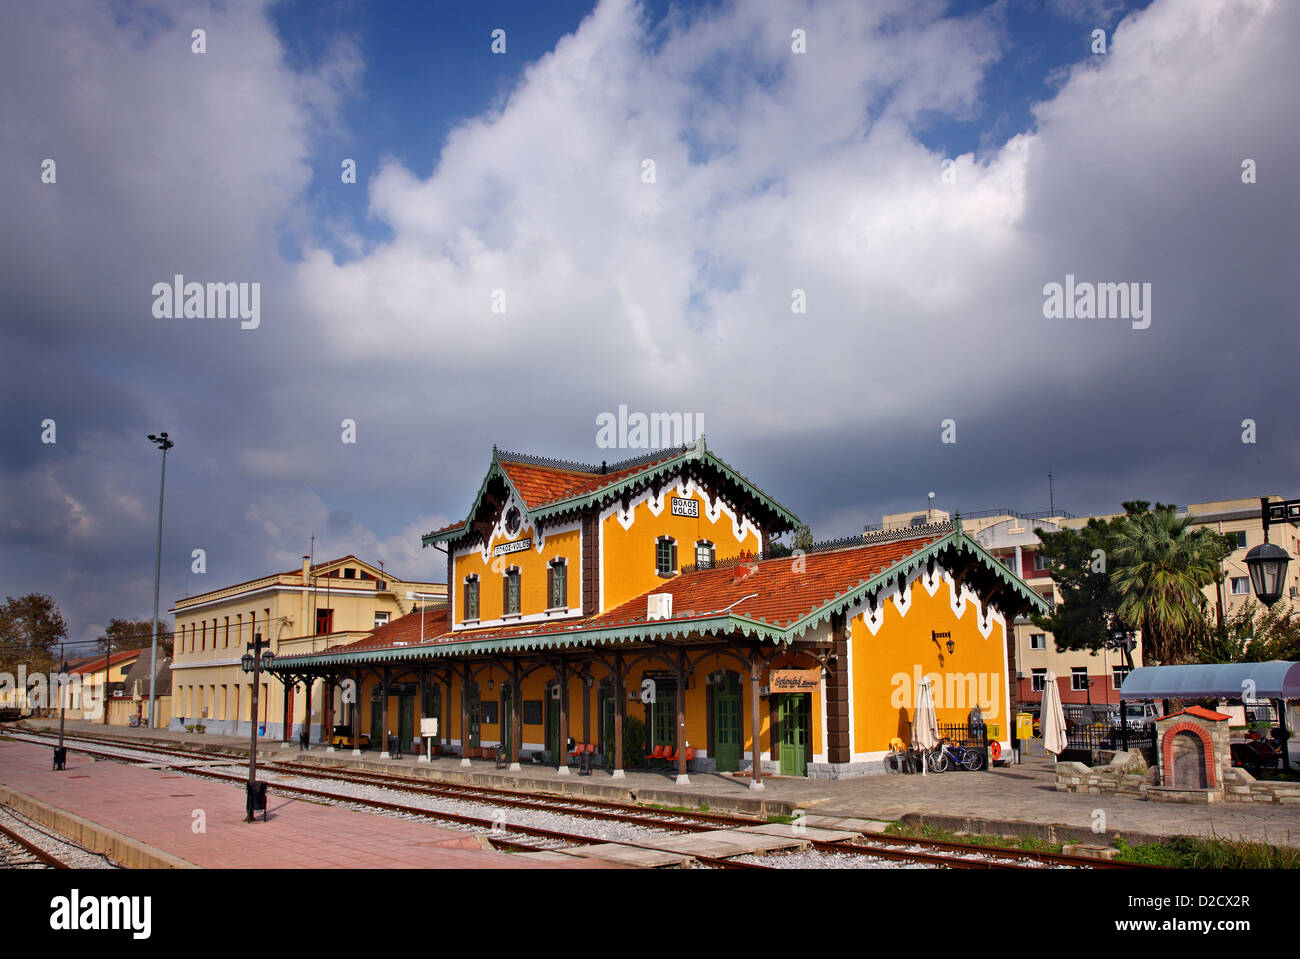 La gare de Volos (Grèce), conçu par Evaristo de Chirico, père du célèbre peintre, Giorgio de Chirico. Banque D'Images